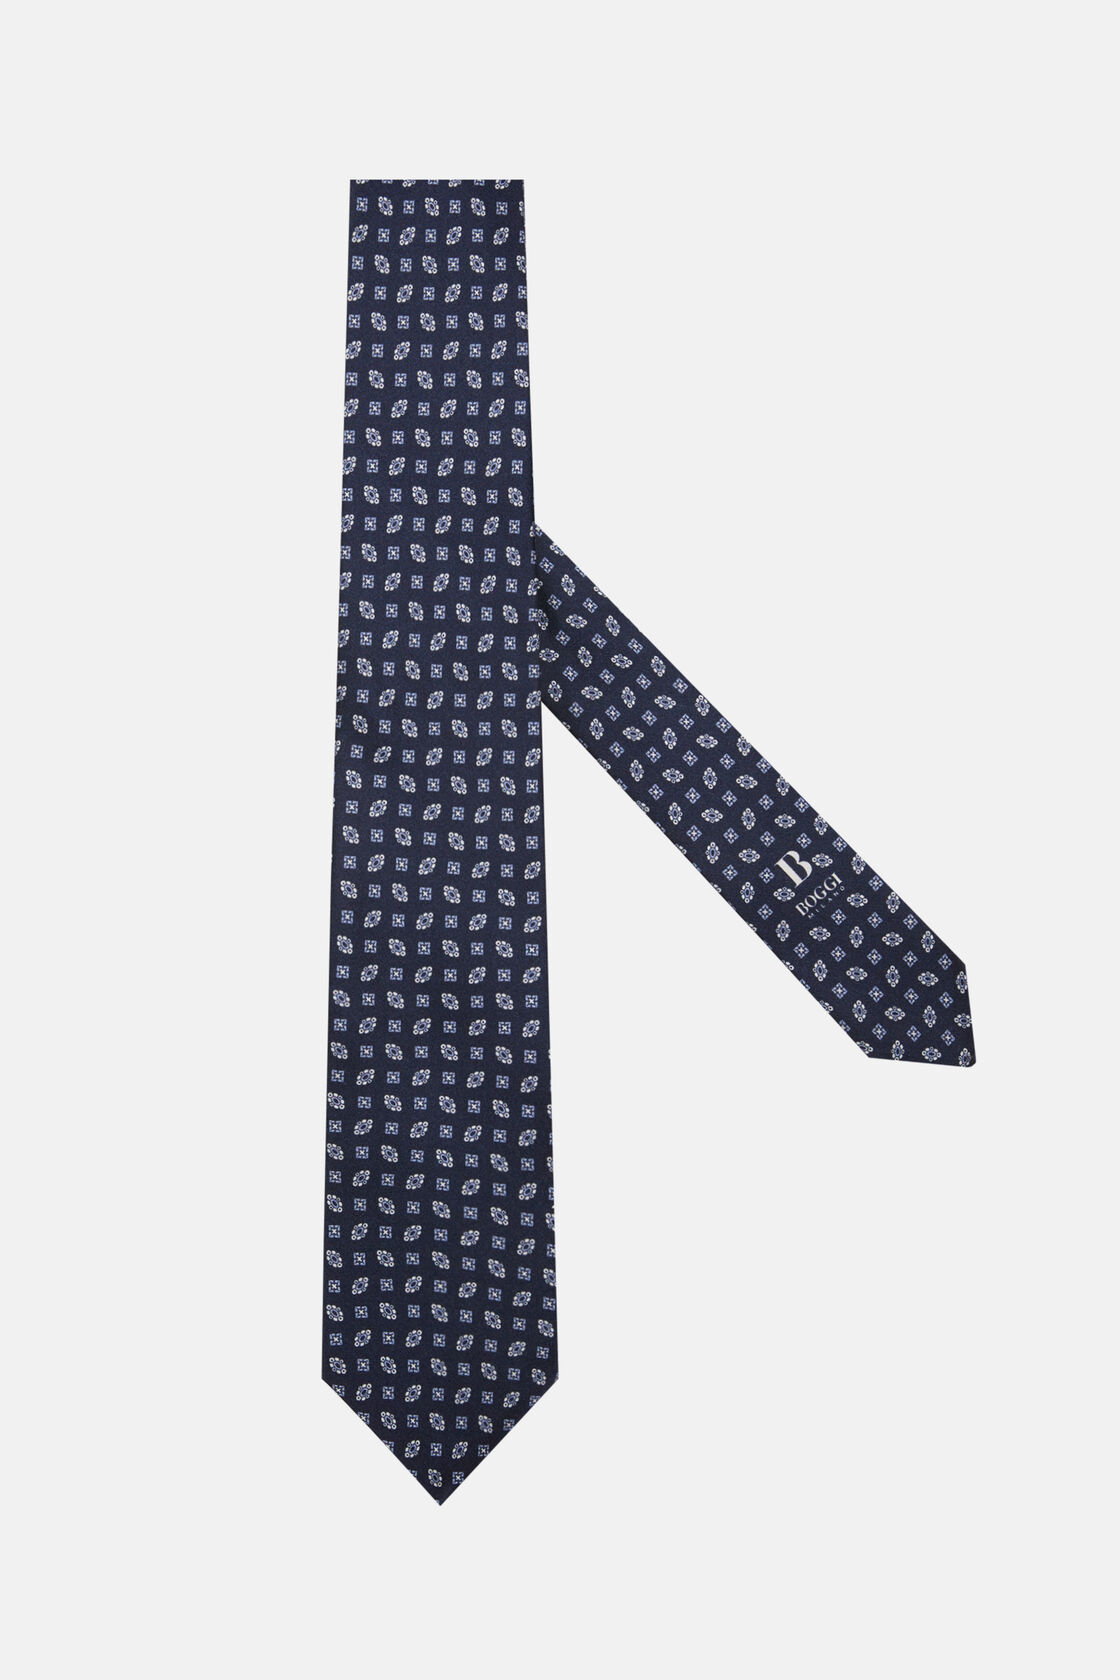 Cravatta Fantasia Geometrica In Seta, Navy, hi-res